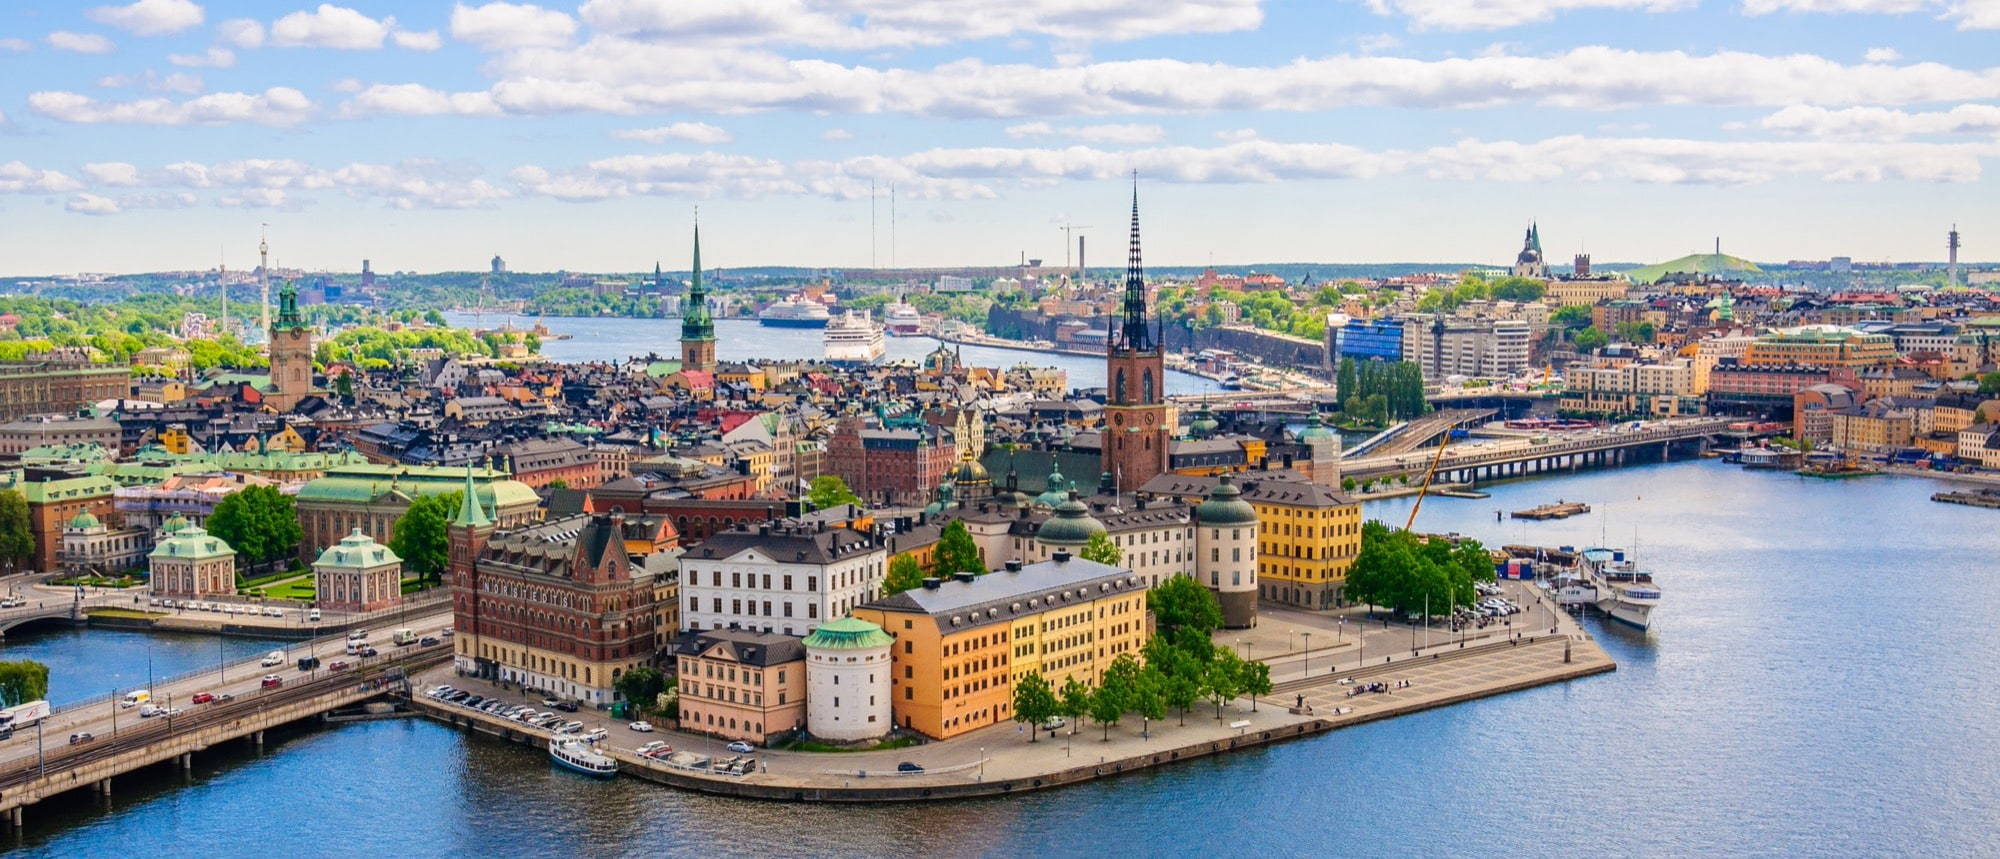 Stockholm Sweden | Contact Rishworth Aviation